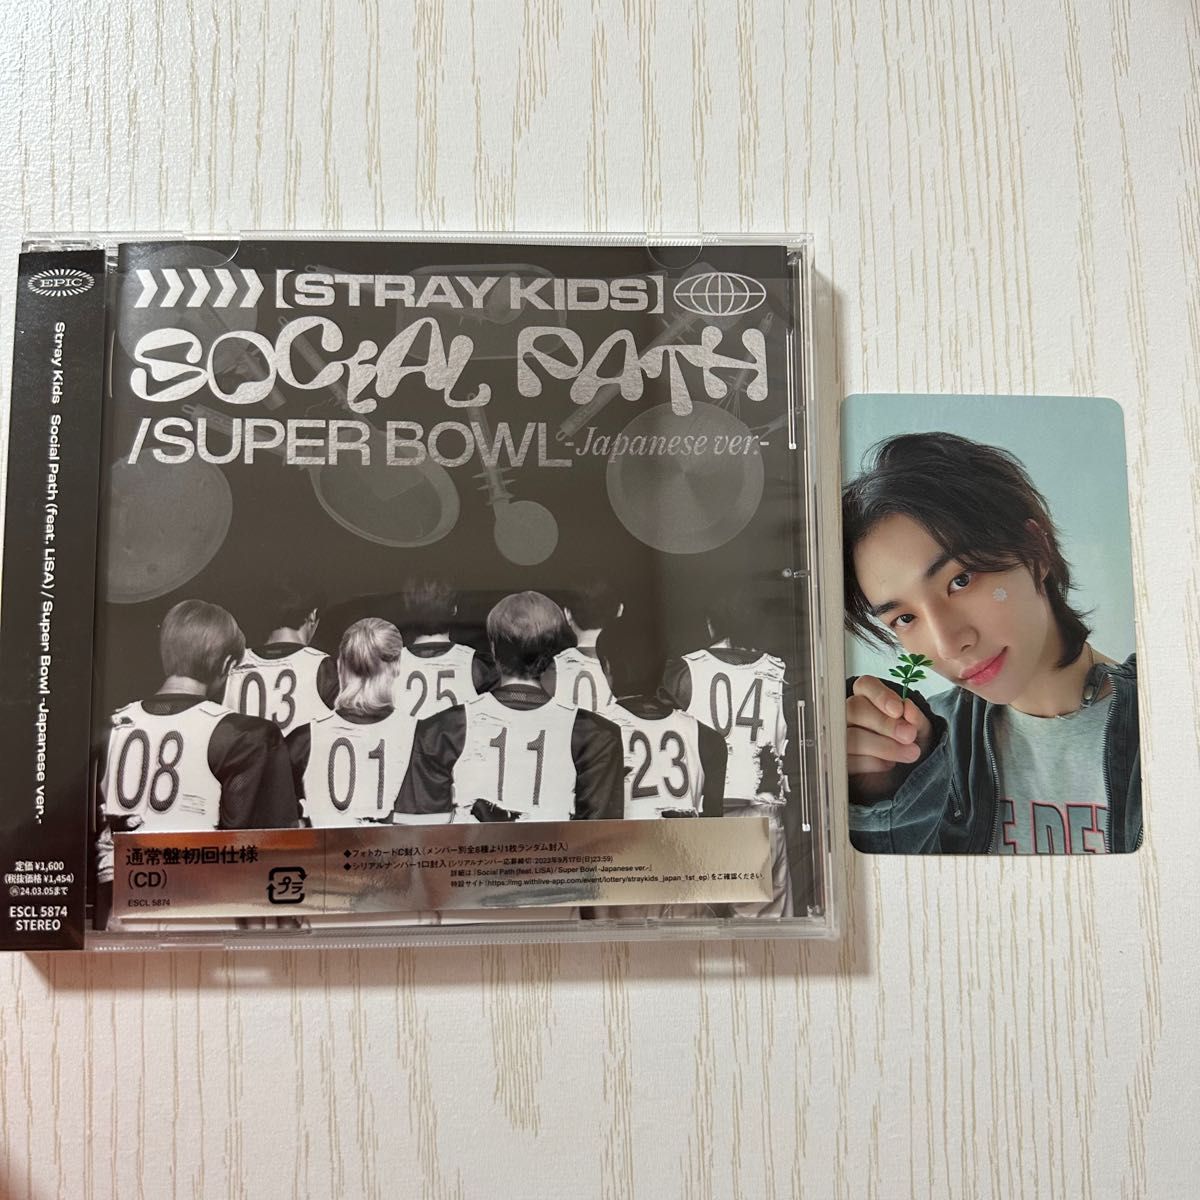 Stray kids social path CD 通常盤 トレカ ヒョンジン